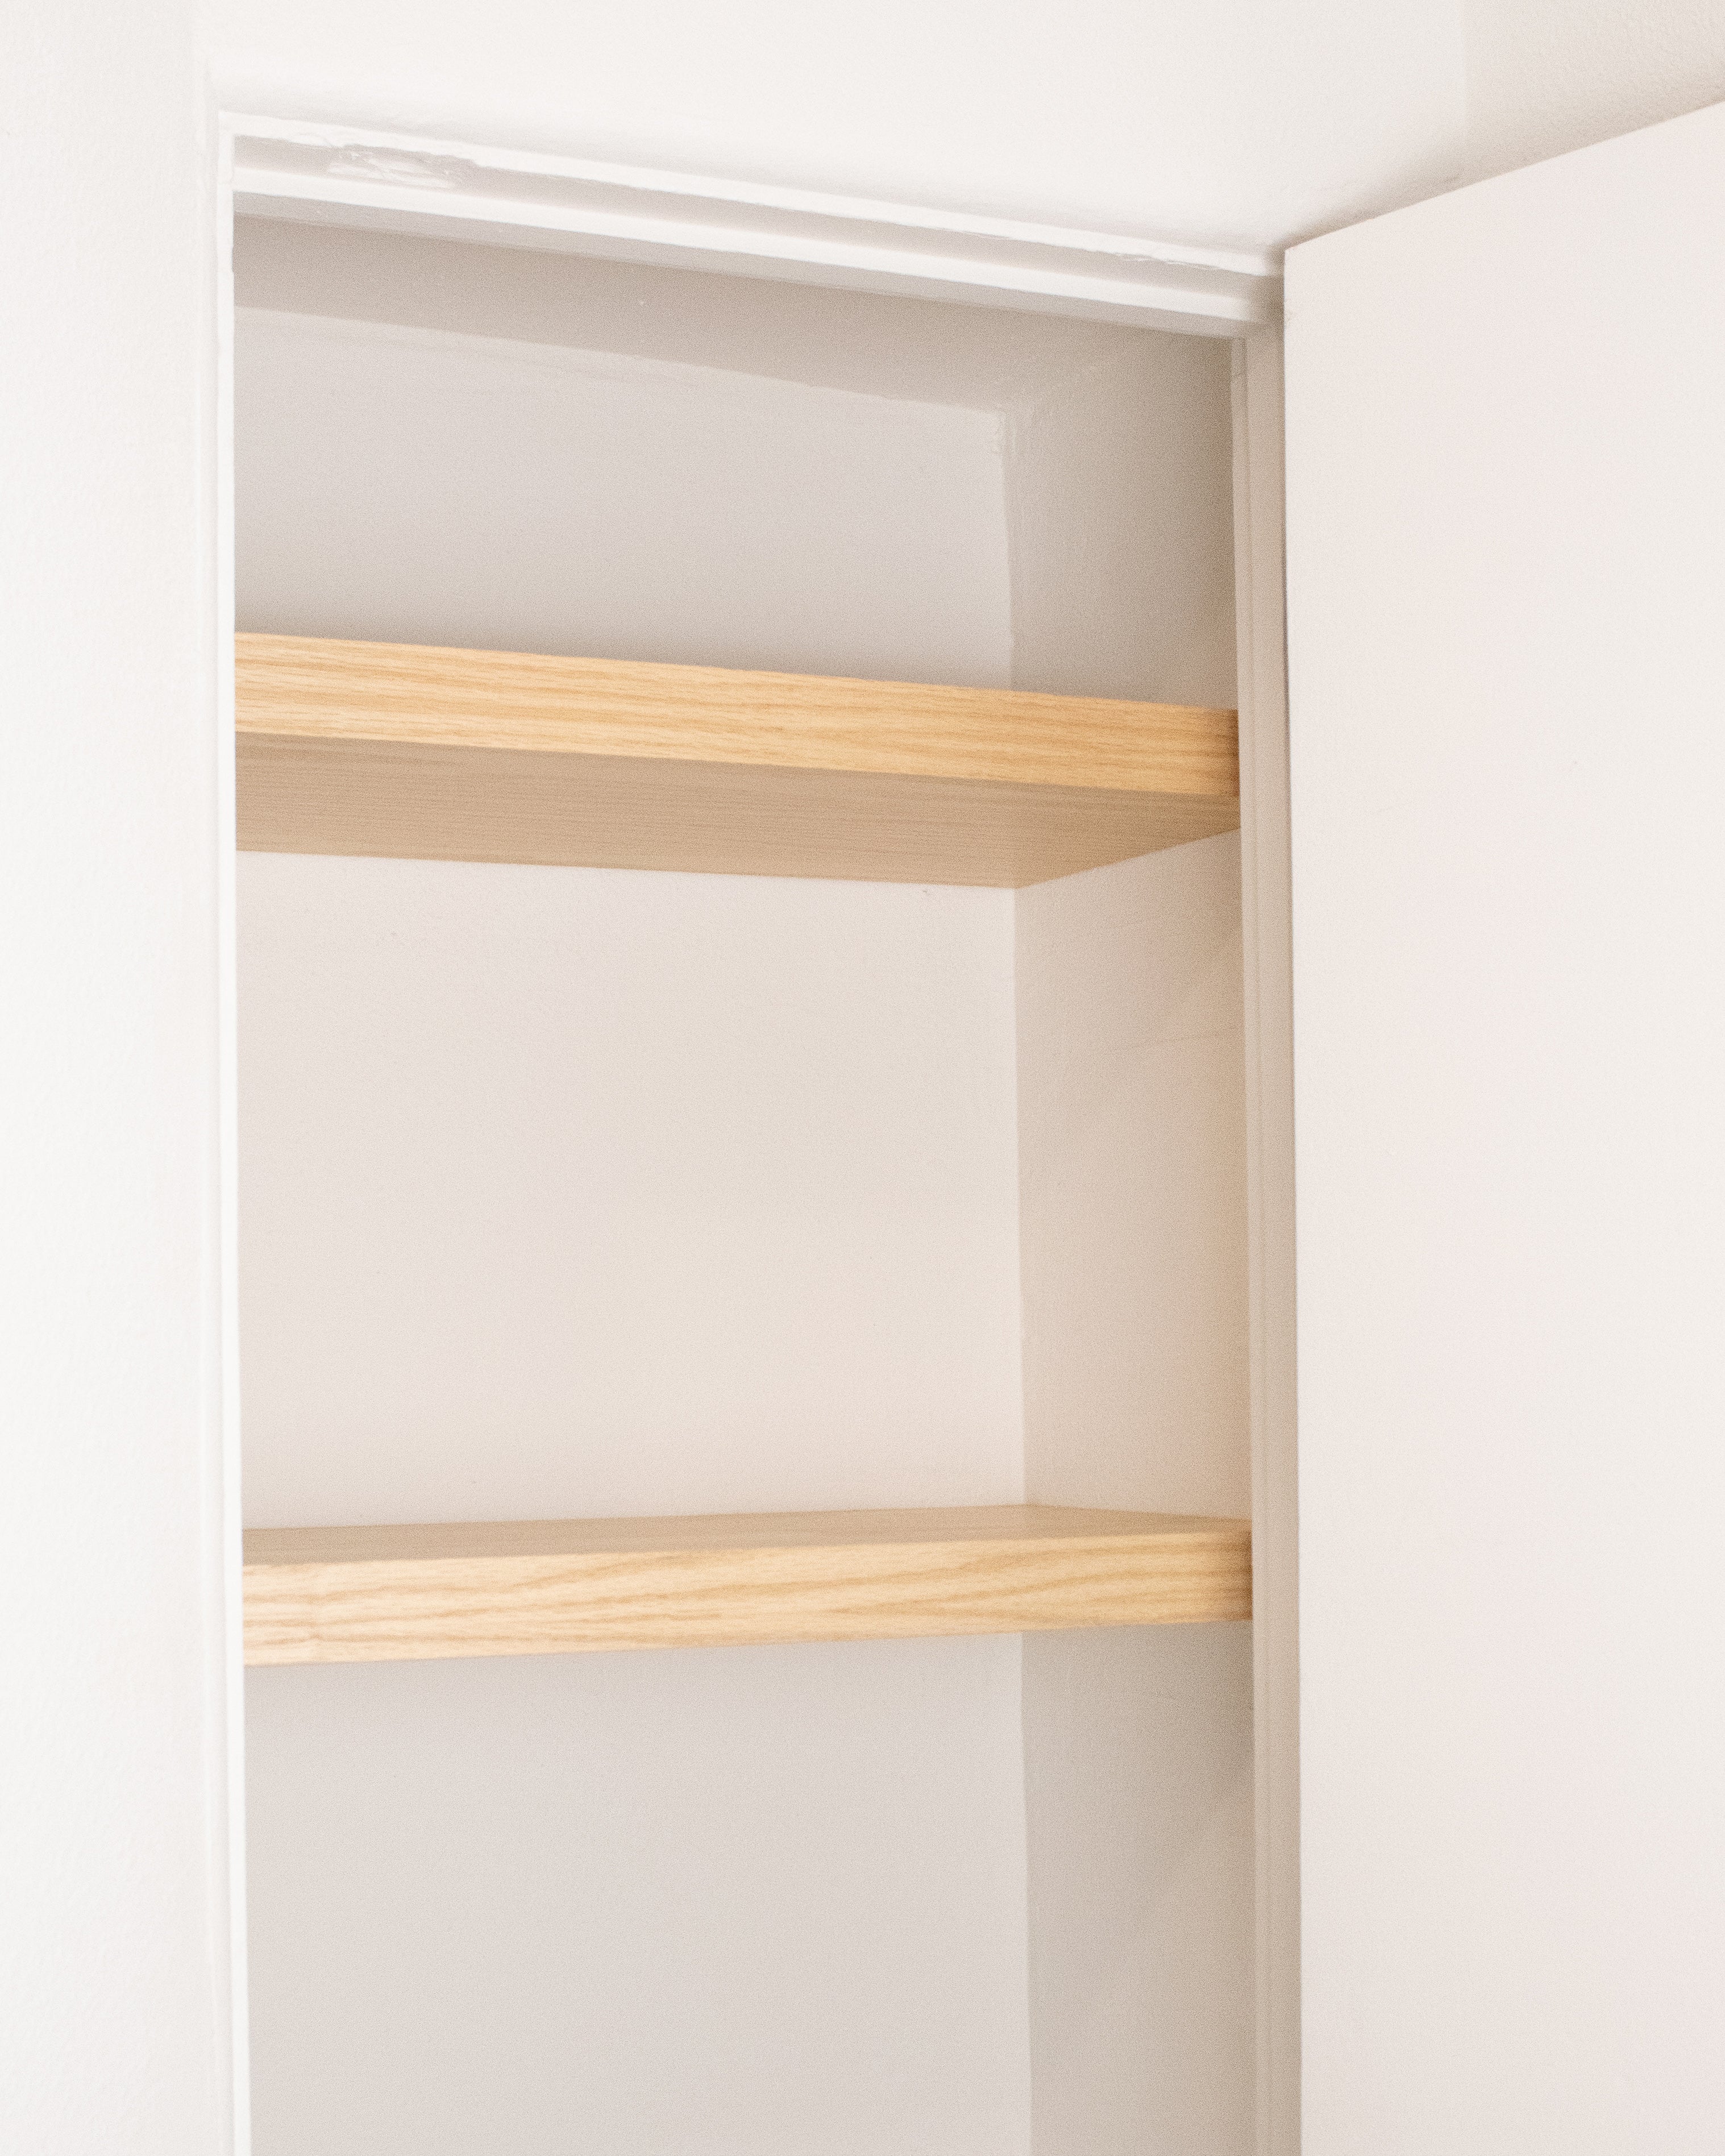 Bleached Oak 2-4" thick Cabinet Top / Slab Shelf